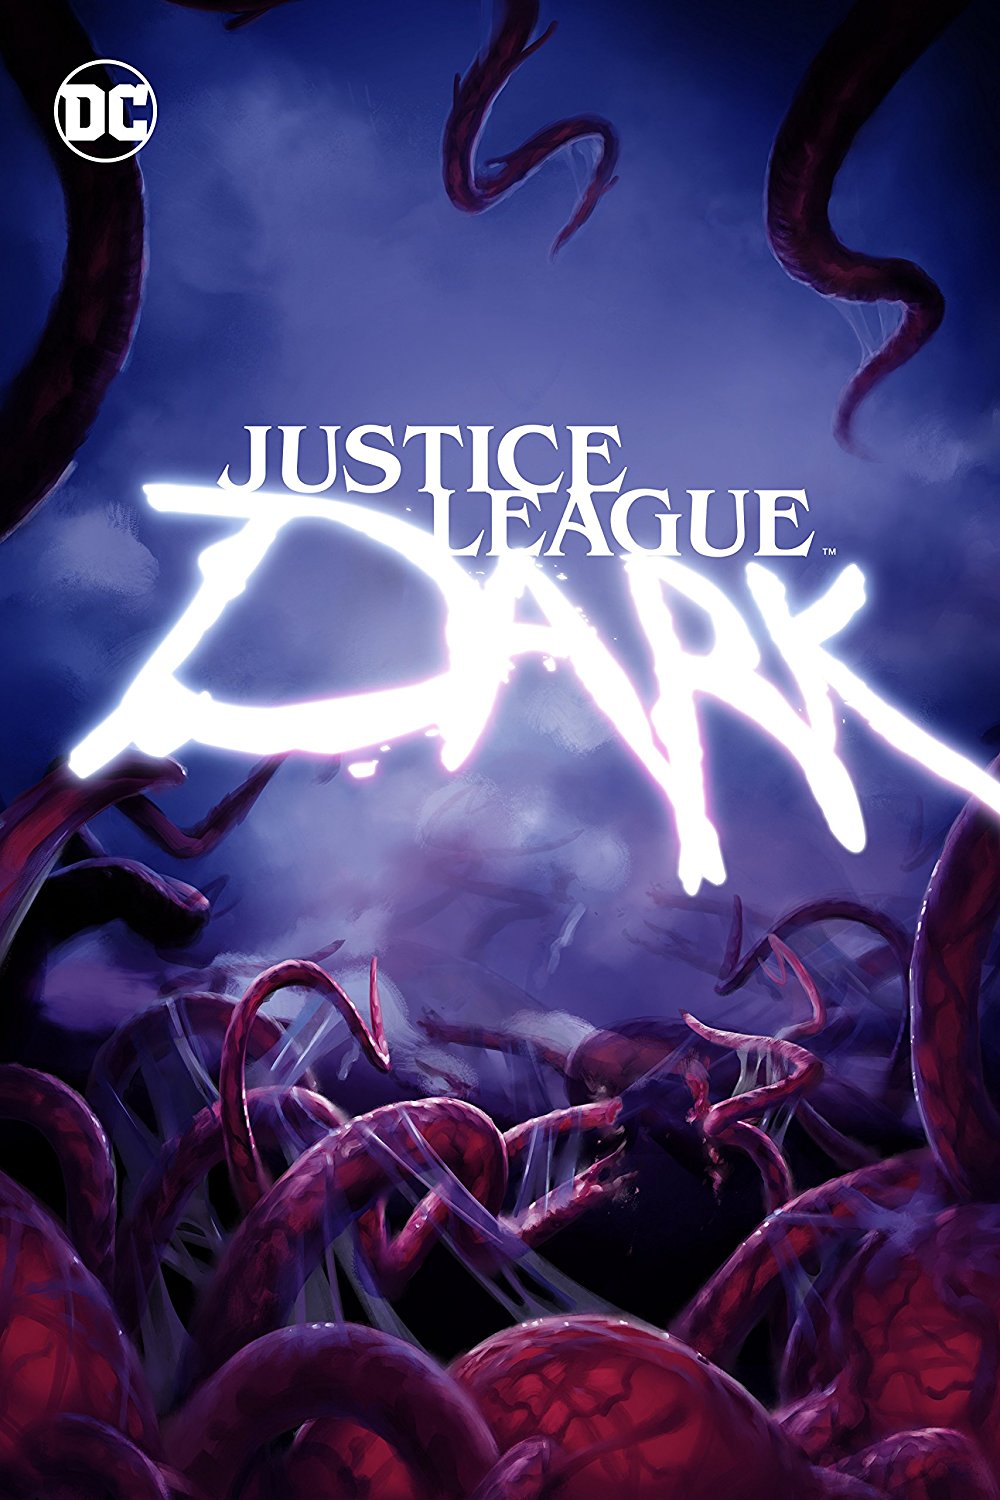 Justice League: Dark